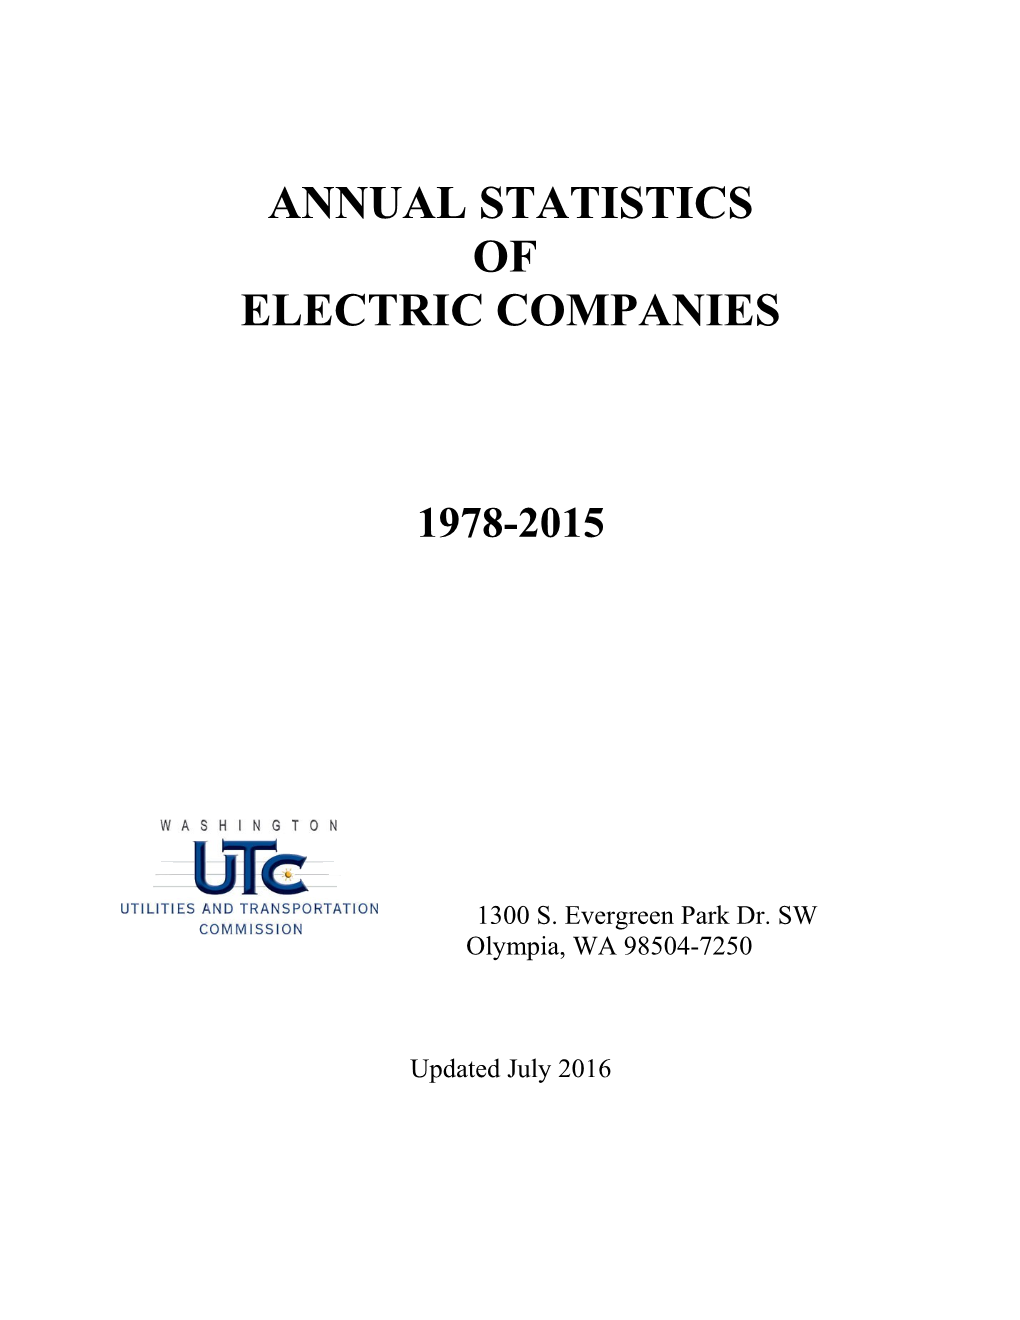 Electric Companies Annual Statistics Report - 1978-2015